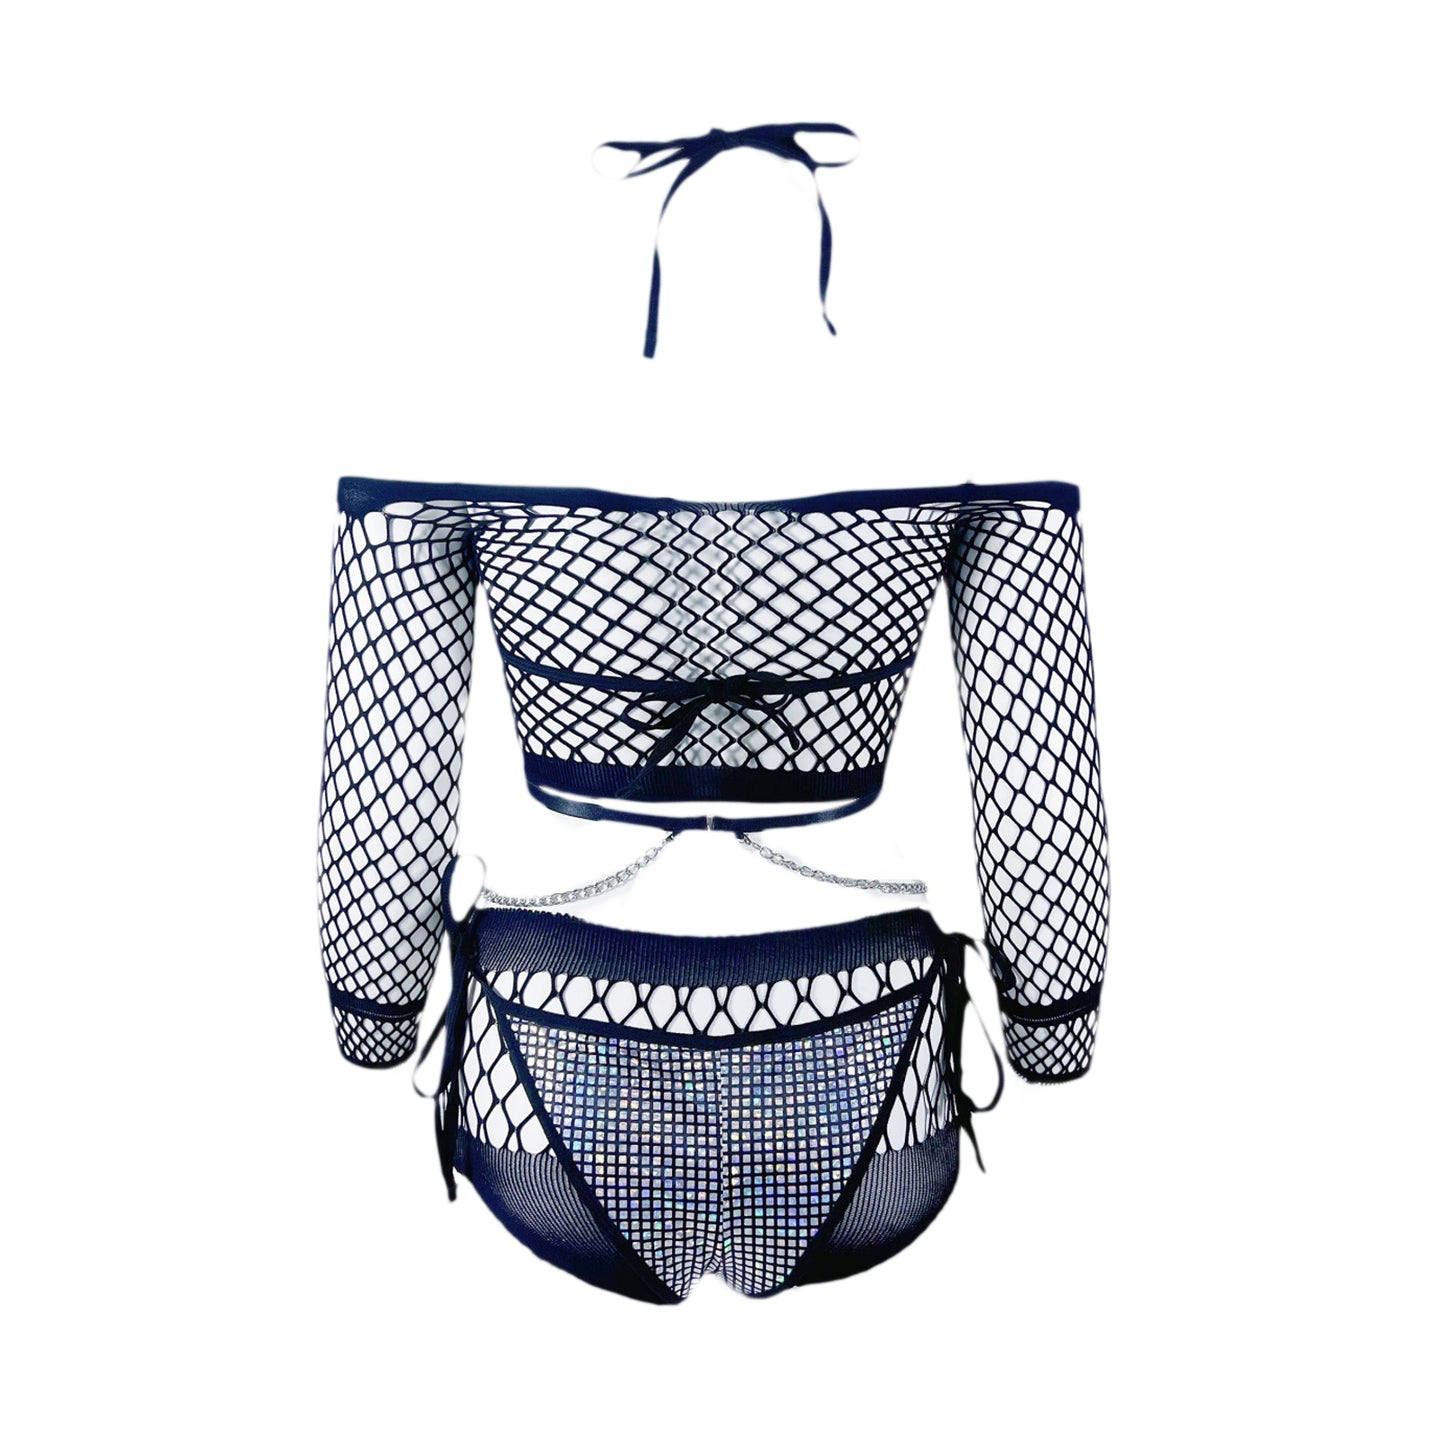 Yomorio Metallic Bikini Set Fishnet Crop Top and Shorts Rave EDC Outfit